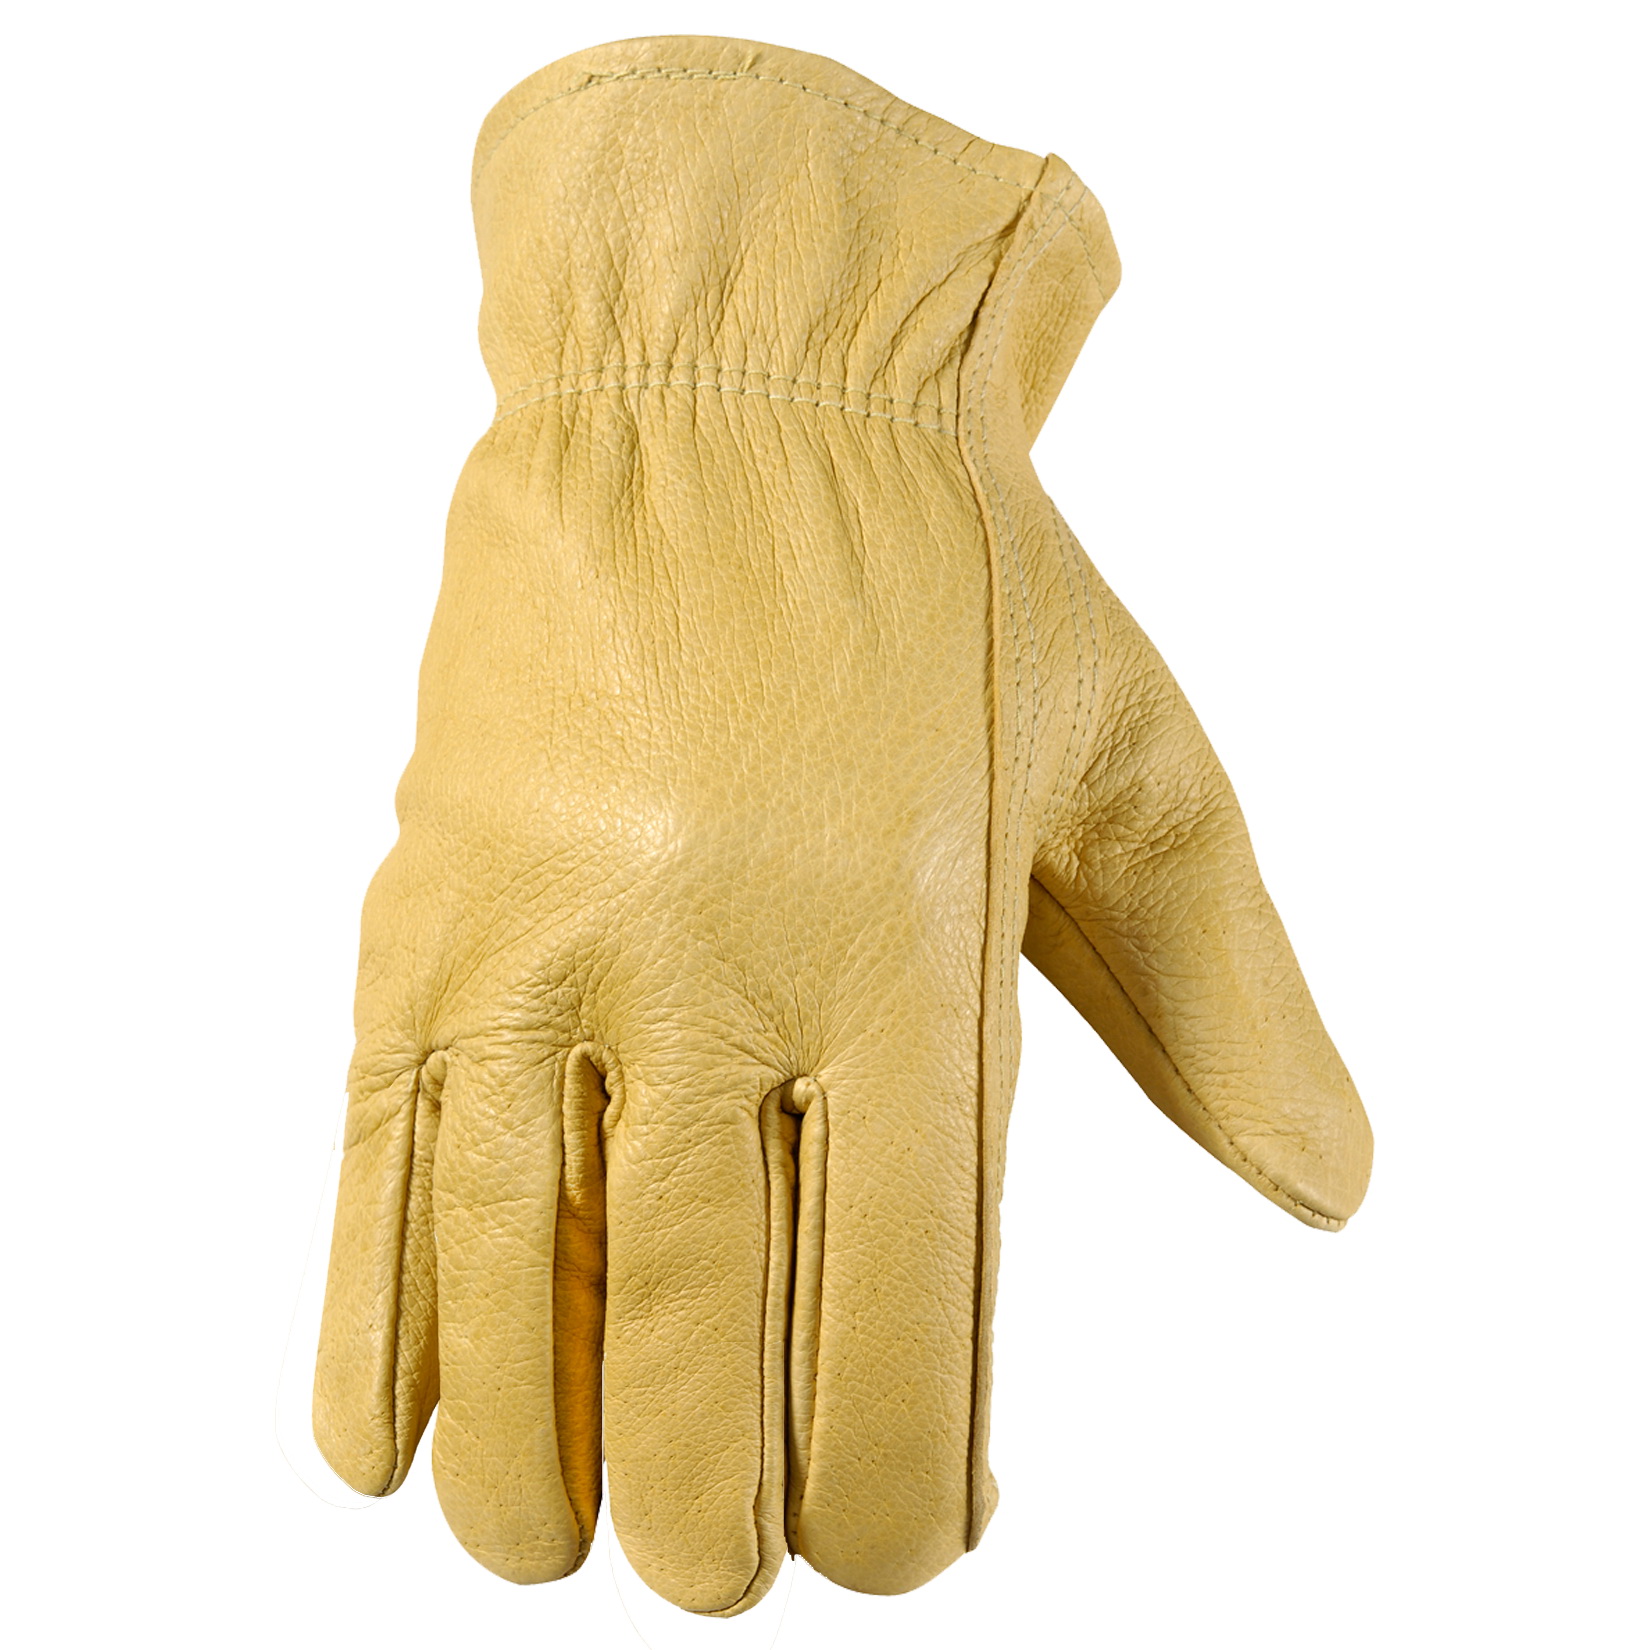 Wells Lamont 1133XL Work Gloves, Men's, XL, Slip-On Cuff, Cowhide Leather, Gold/Yellow - 1